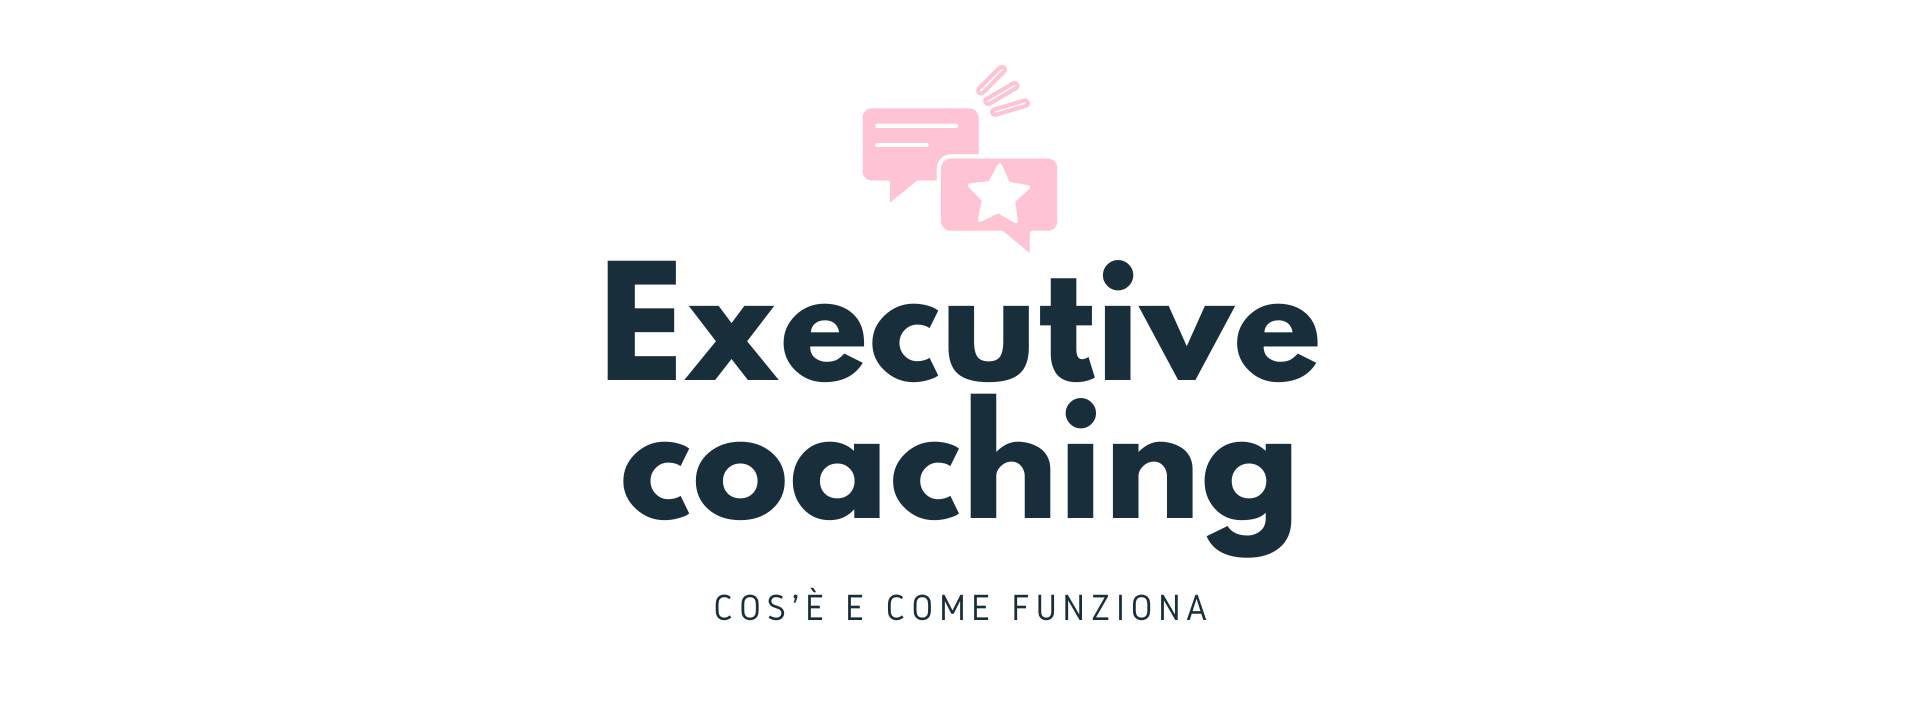 Executive coaching - Come funziona